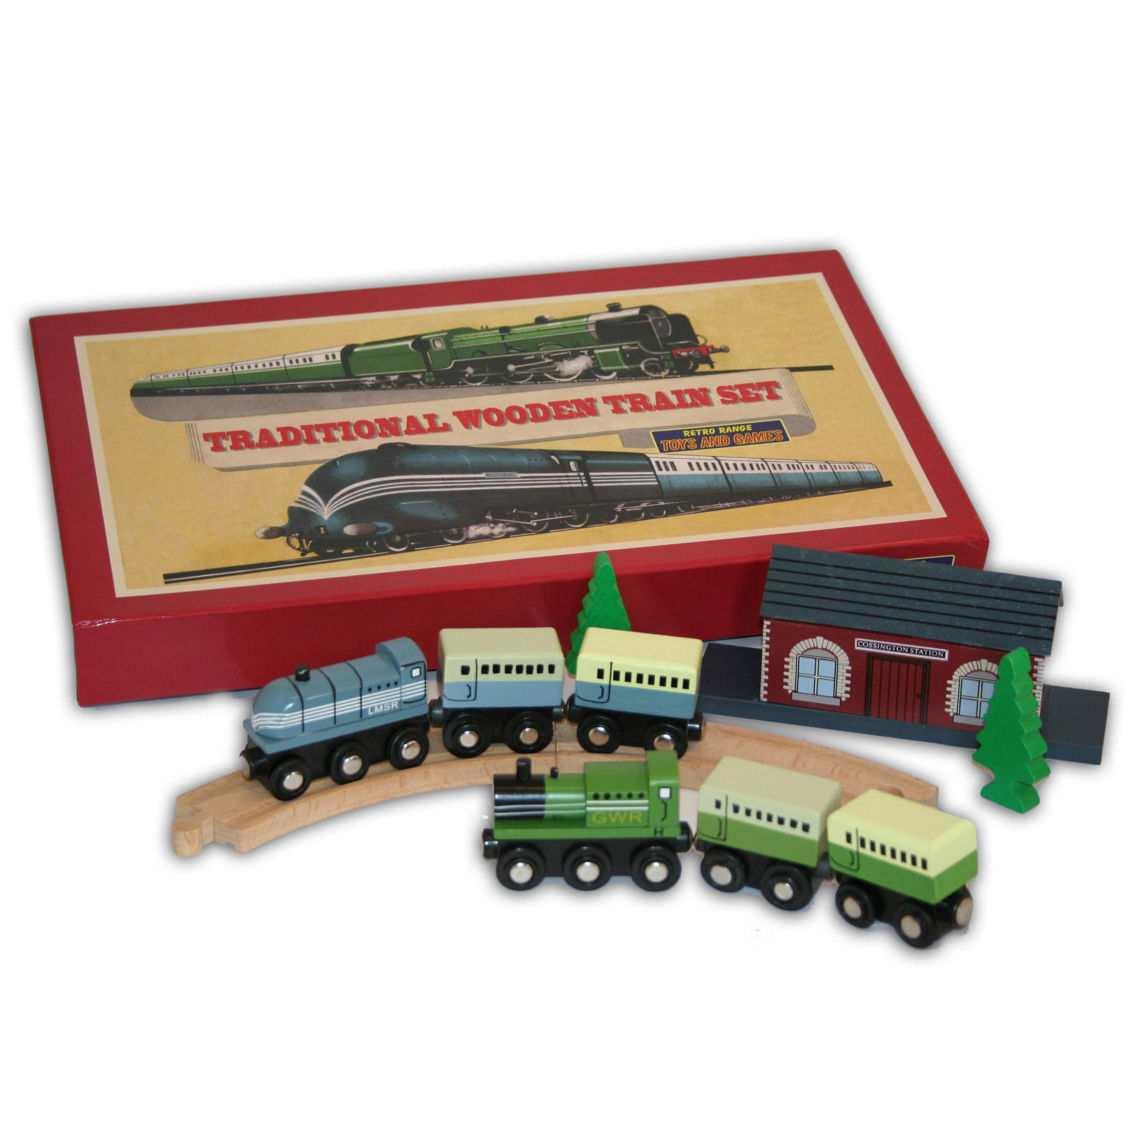 Perisphere & Trylon Traditional Wooden Train Set - Image 2 of 2